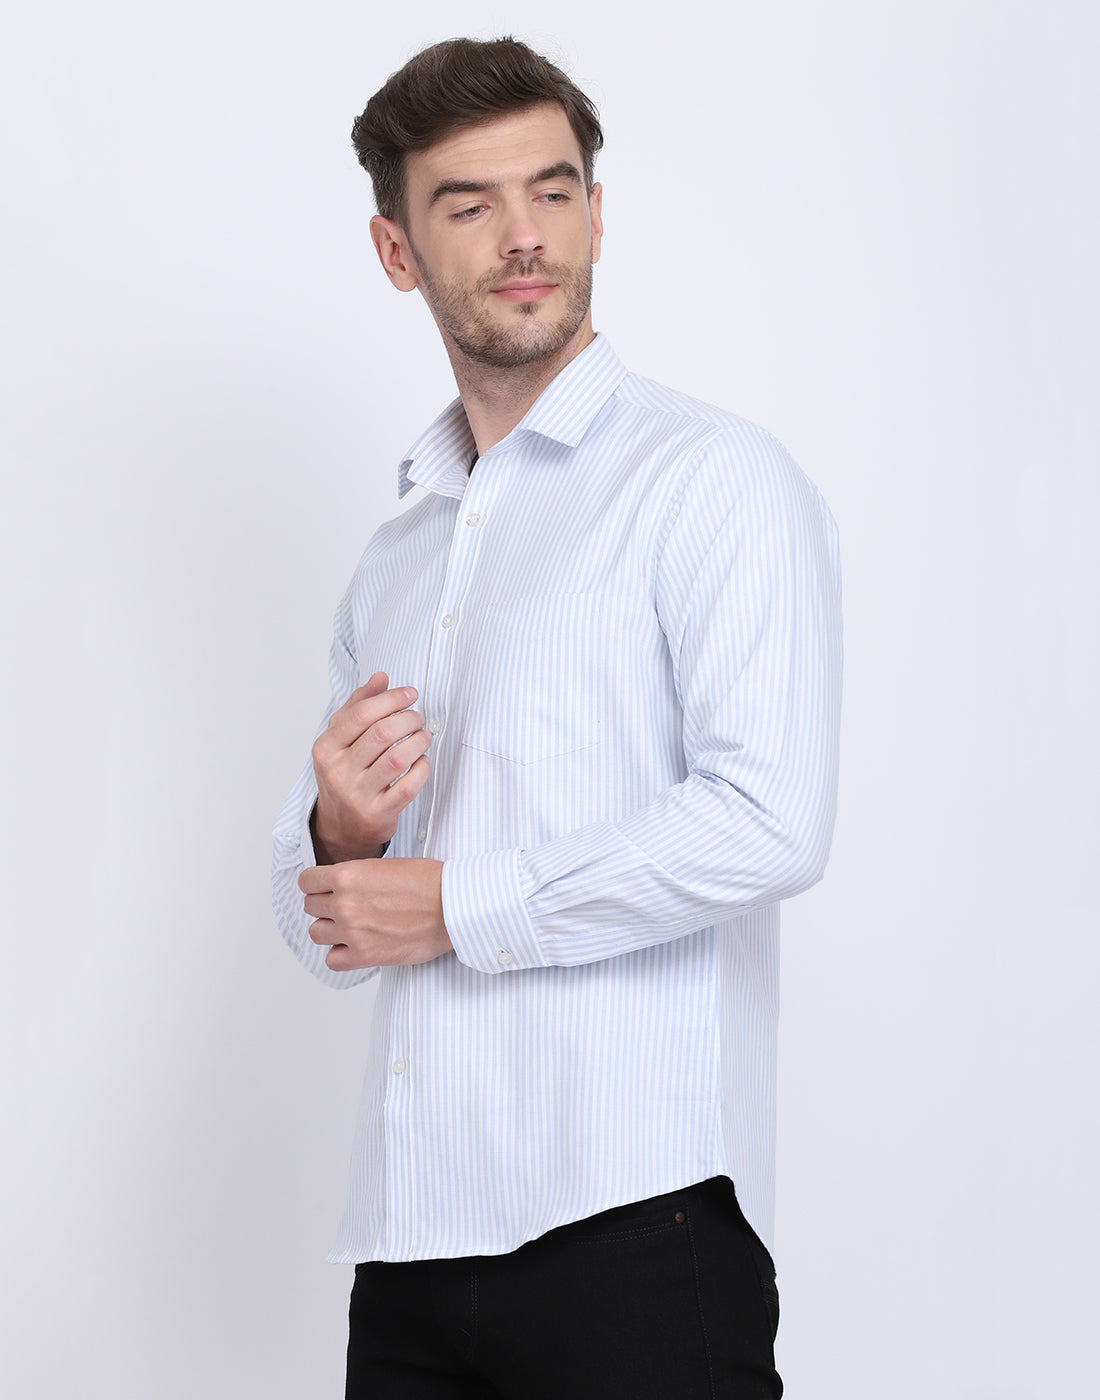 Cotton oxford Casual blue & white striped Shirt